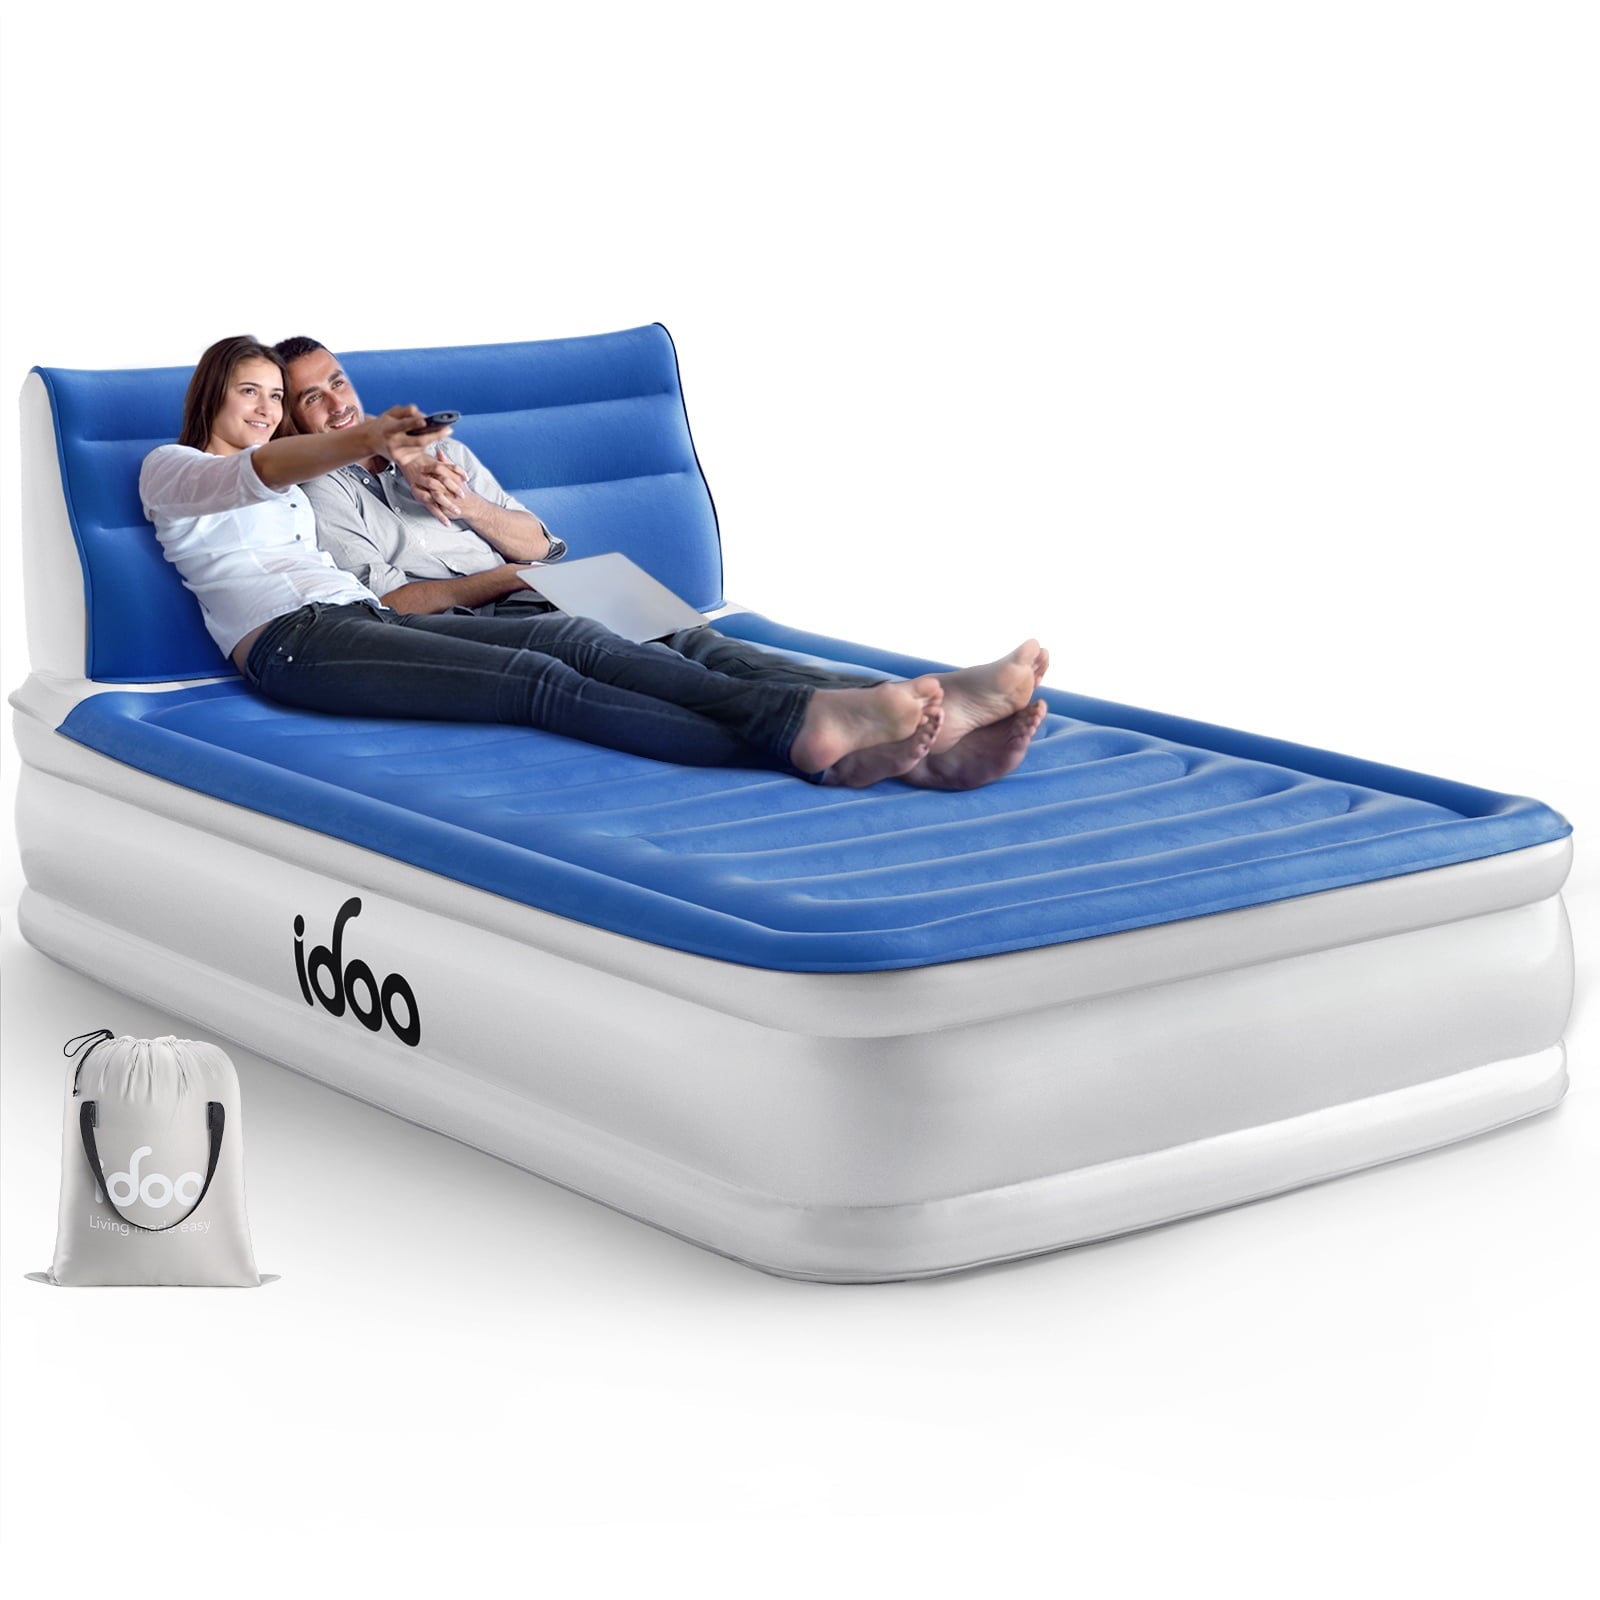 iDOO Full Headboard Air Mattress, 15" Inflatable Bed with Built-in Pump, 700lbs Max - by iDOO